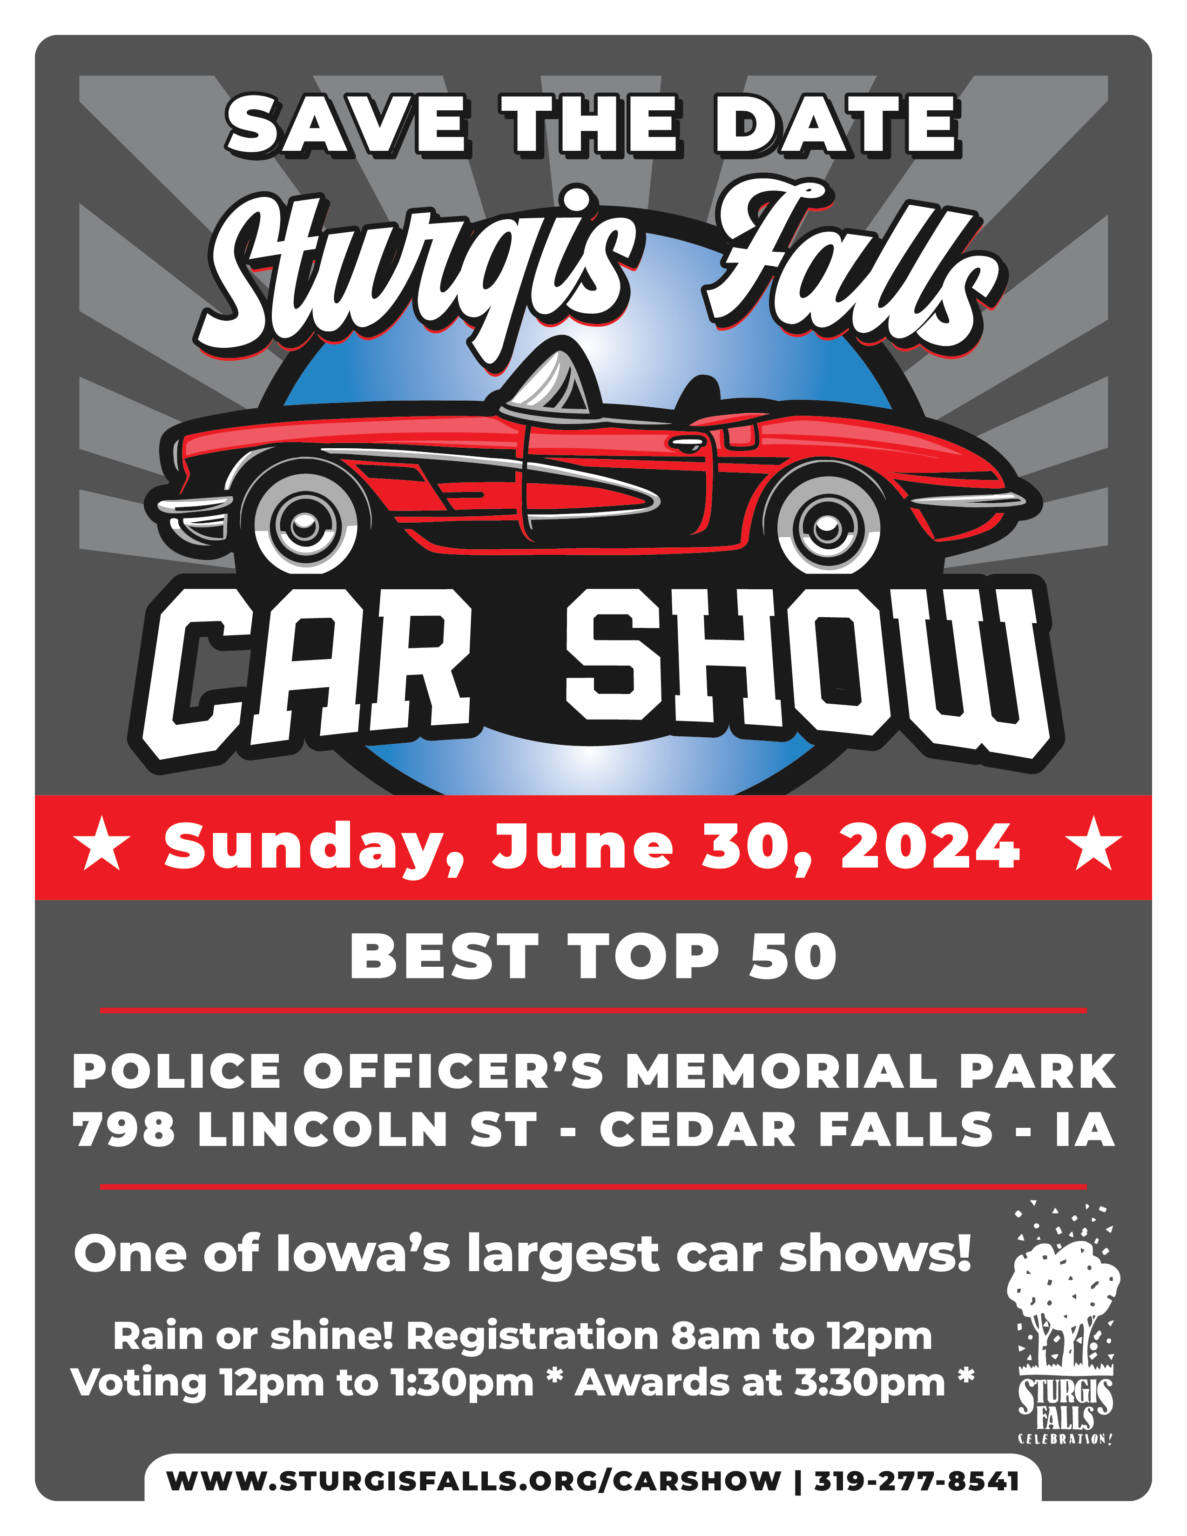 Car Show Sturgis Falls Celebration in Cedar Falls Iowa